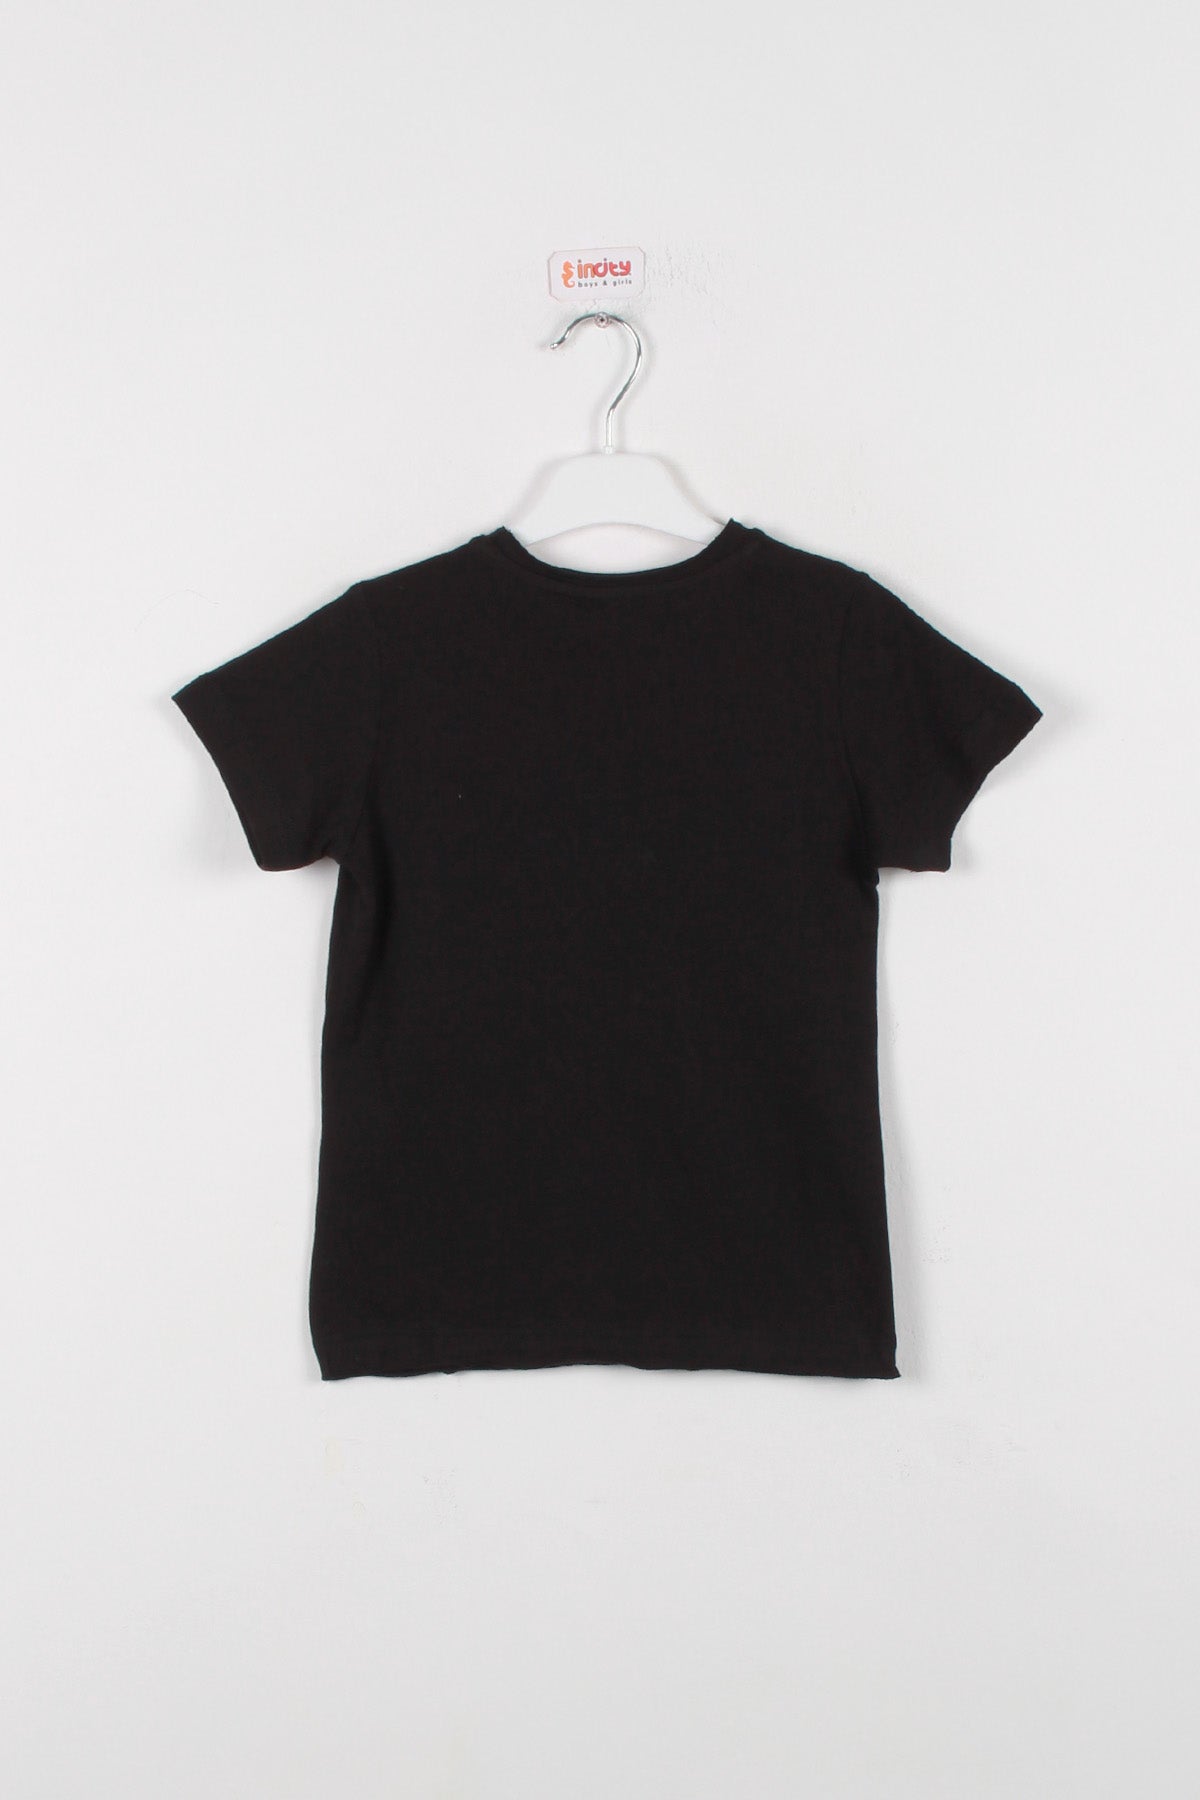 Basic Round Solid Plain Boys InCity Kids Short T-Shirt Neck Sleeve